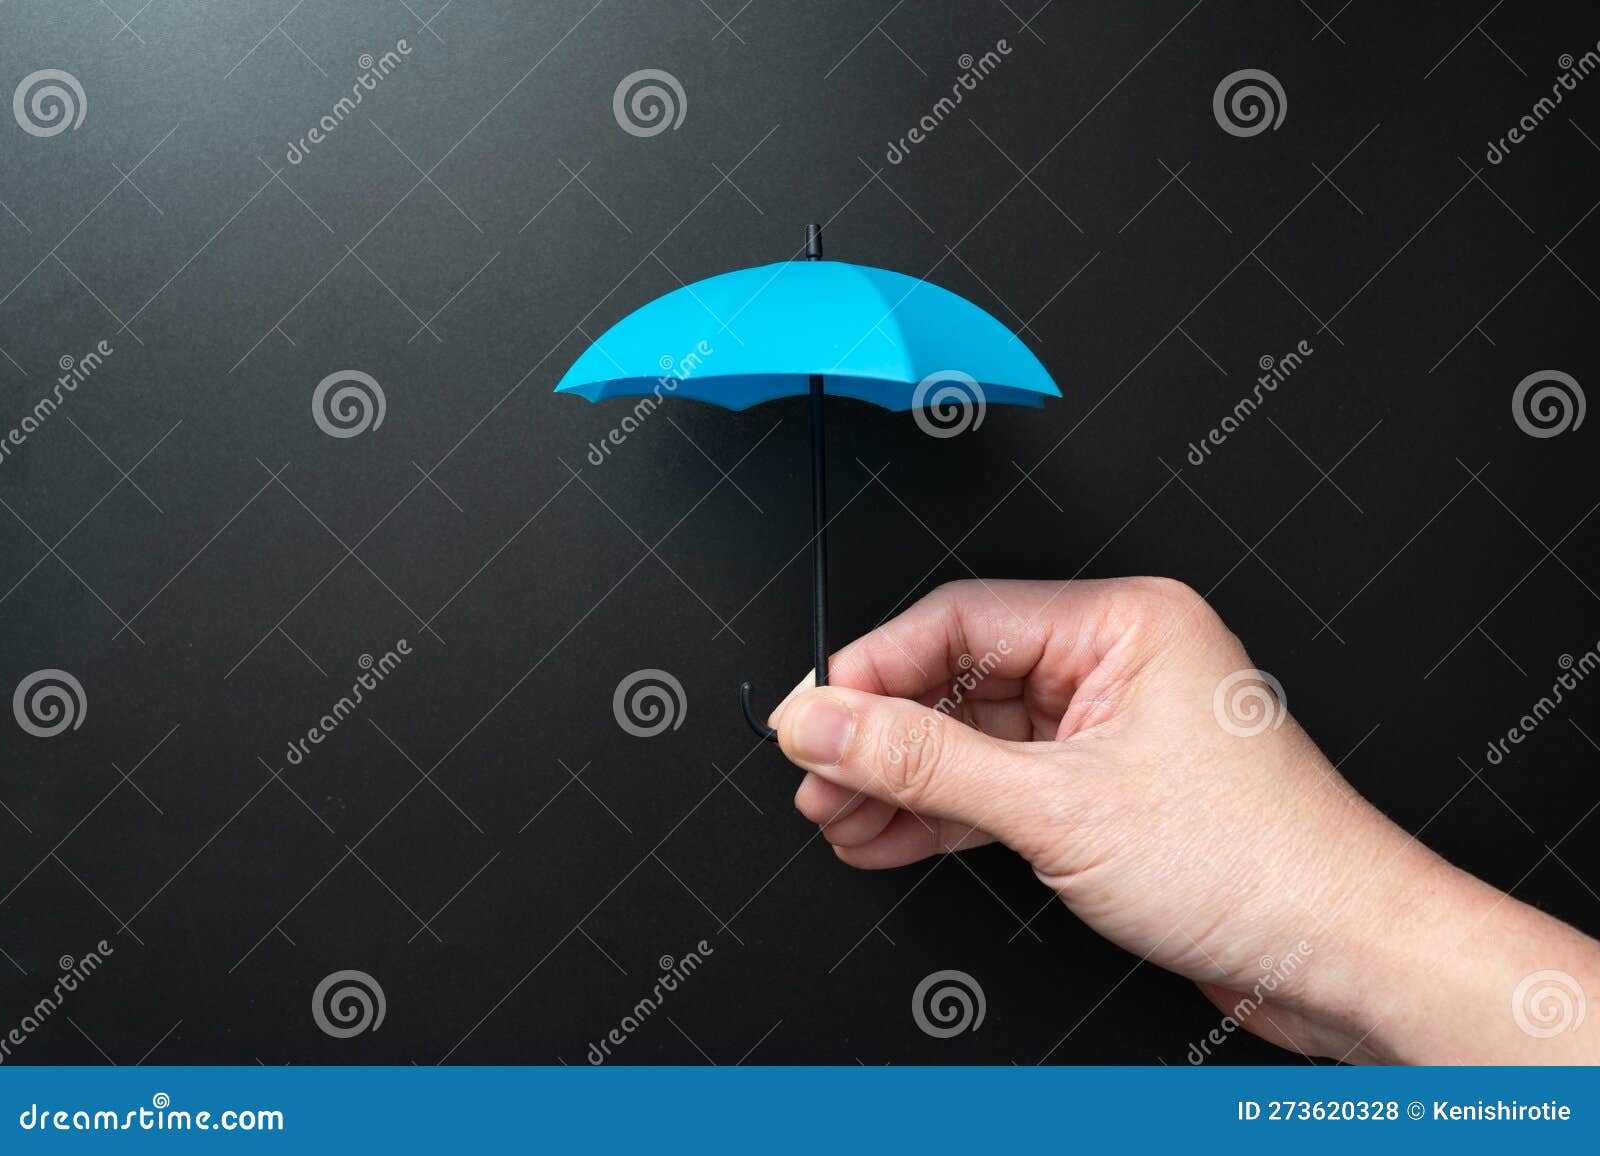 https://thumbs.dreamstime.com/z/mano-sujetando-mini-paraguas-azul-abierto-aislado-en-fondo-negro-blanco-273620328.jpg